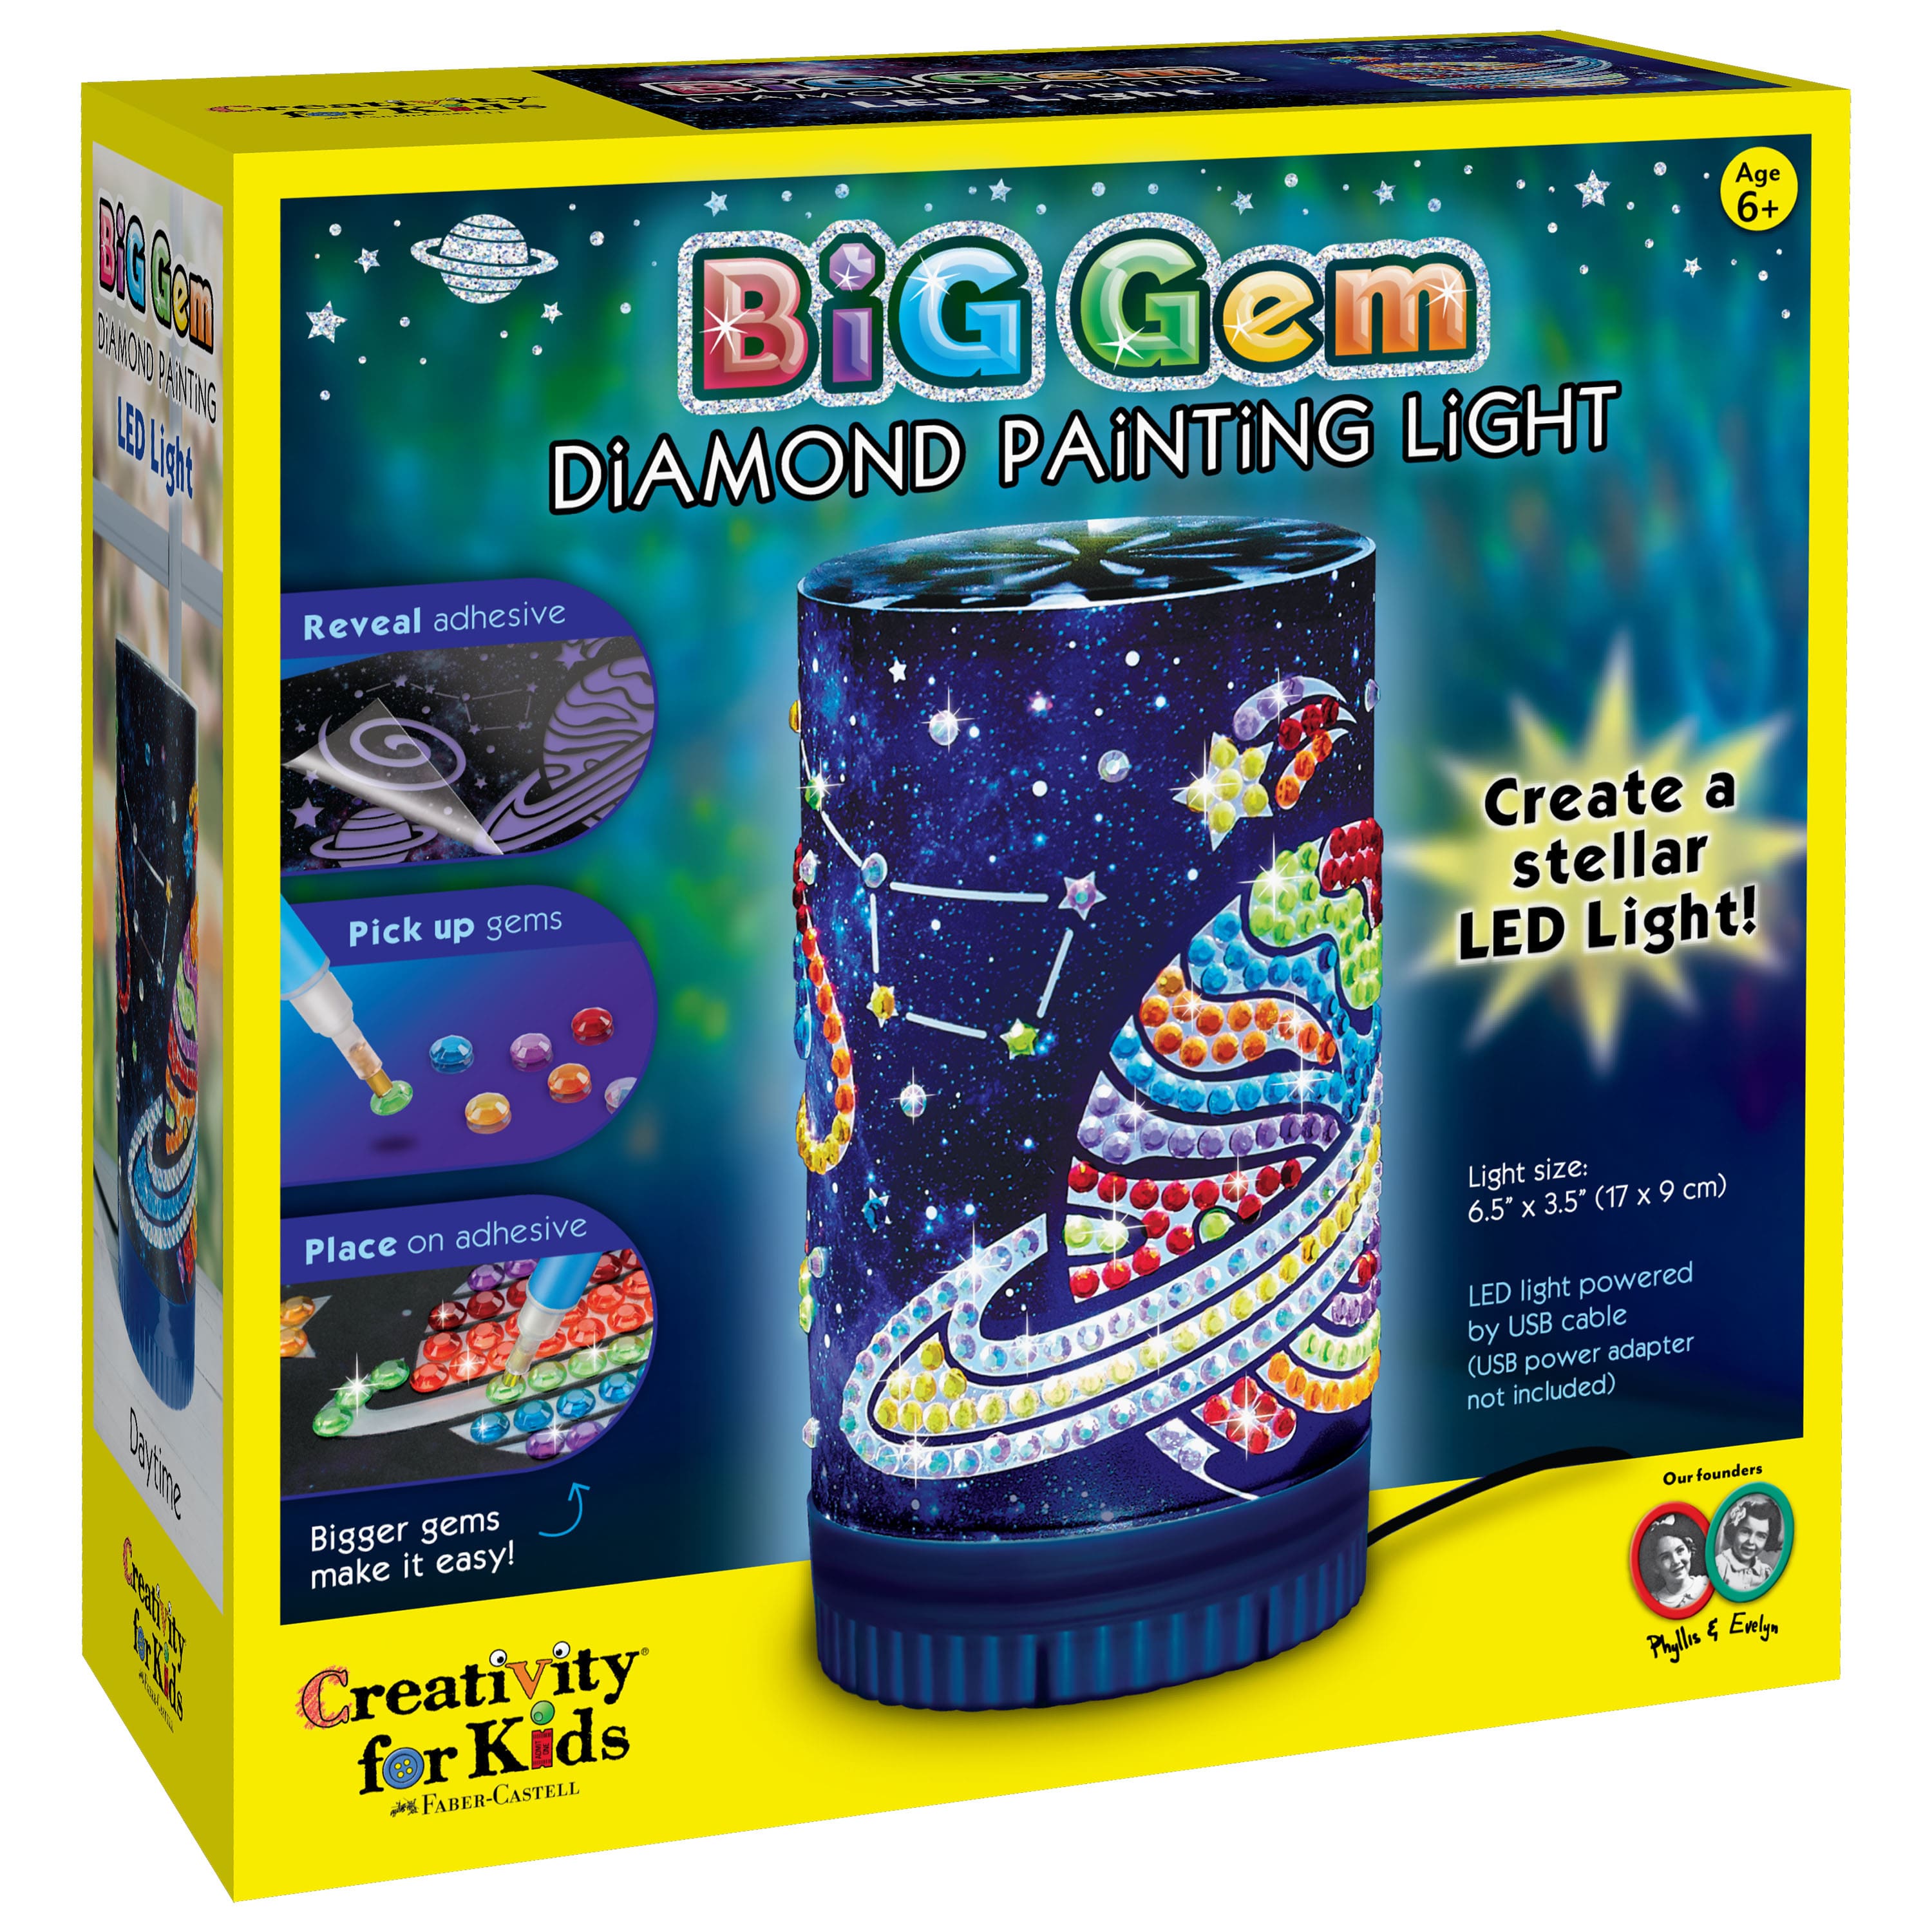 Creativity for Kids Big Gem Diamond Painting Kit - Sweets